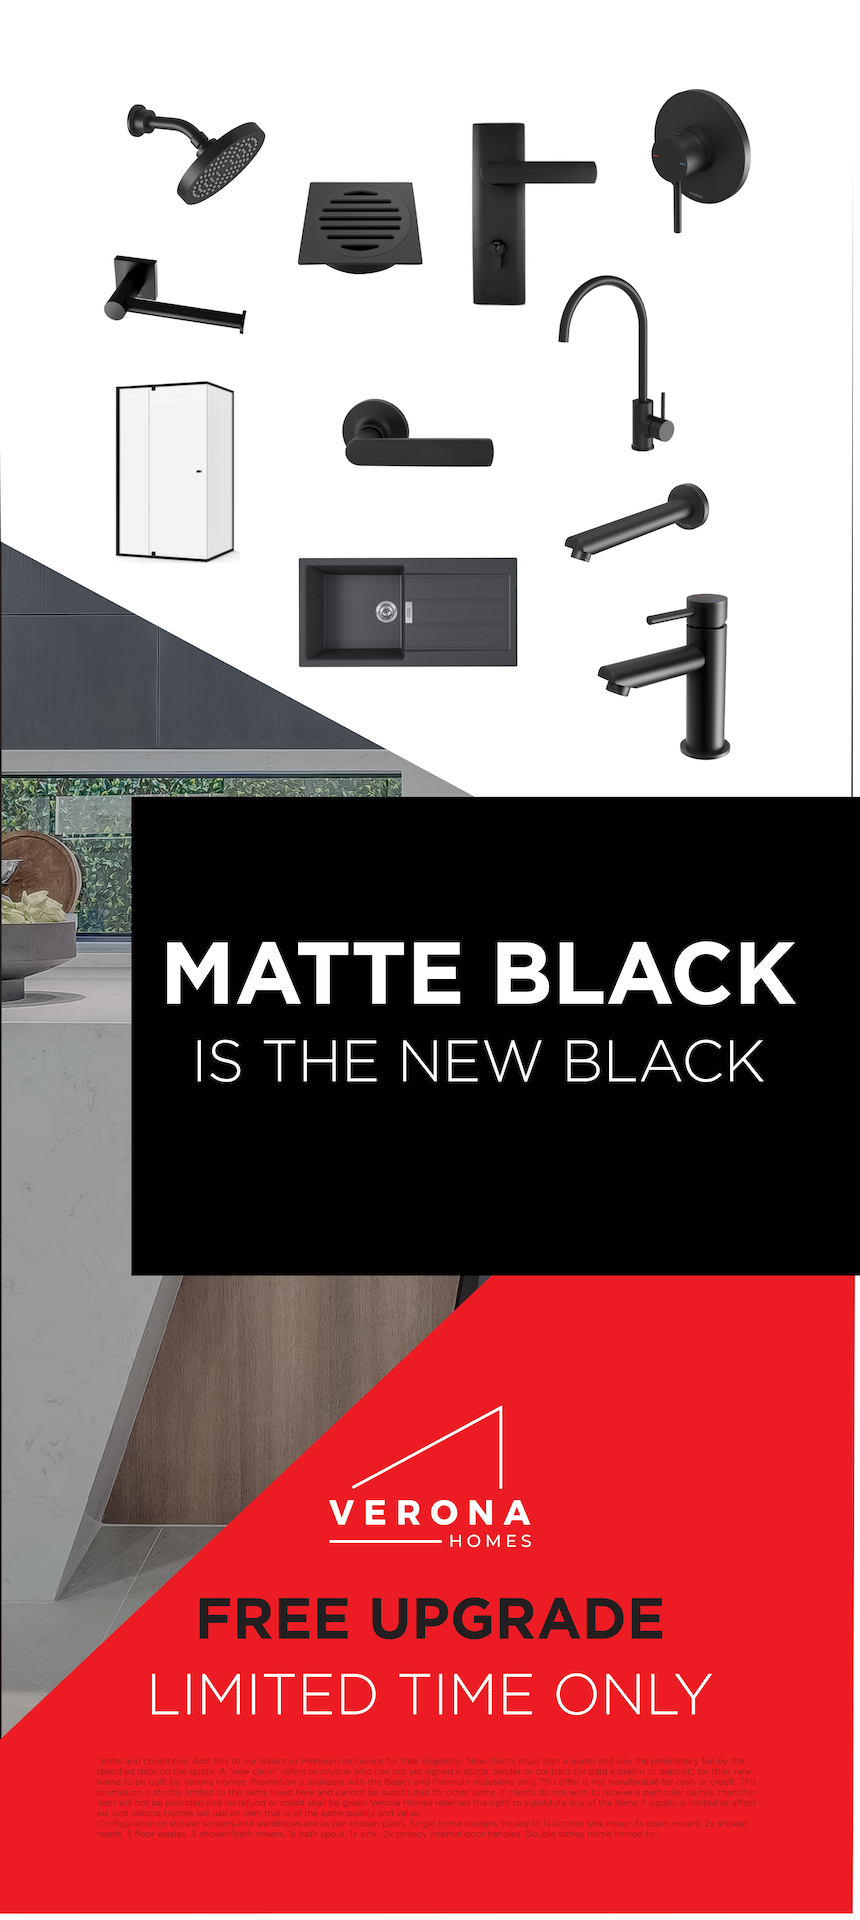 Matte Black is the New Black